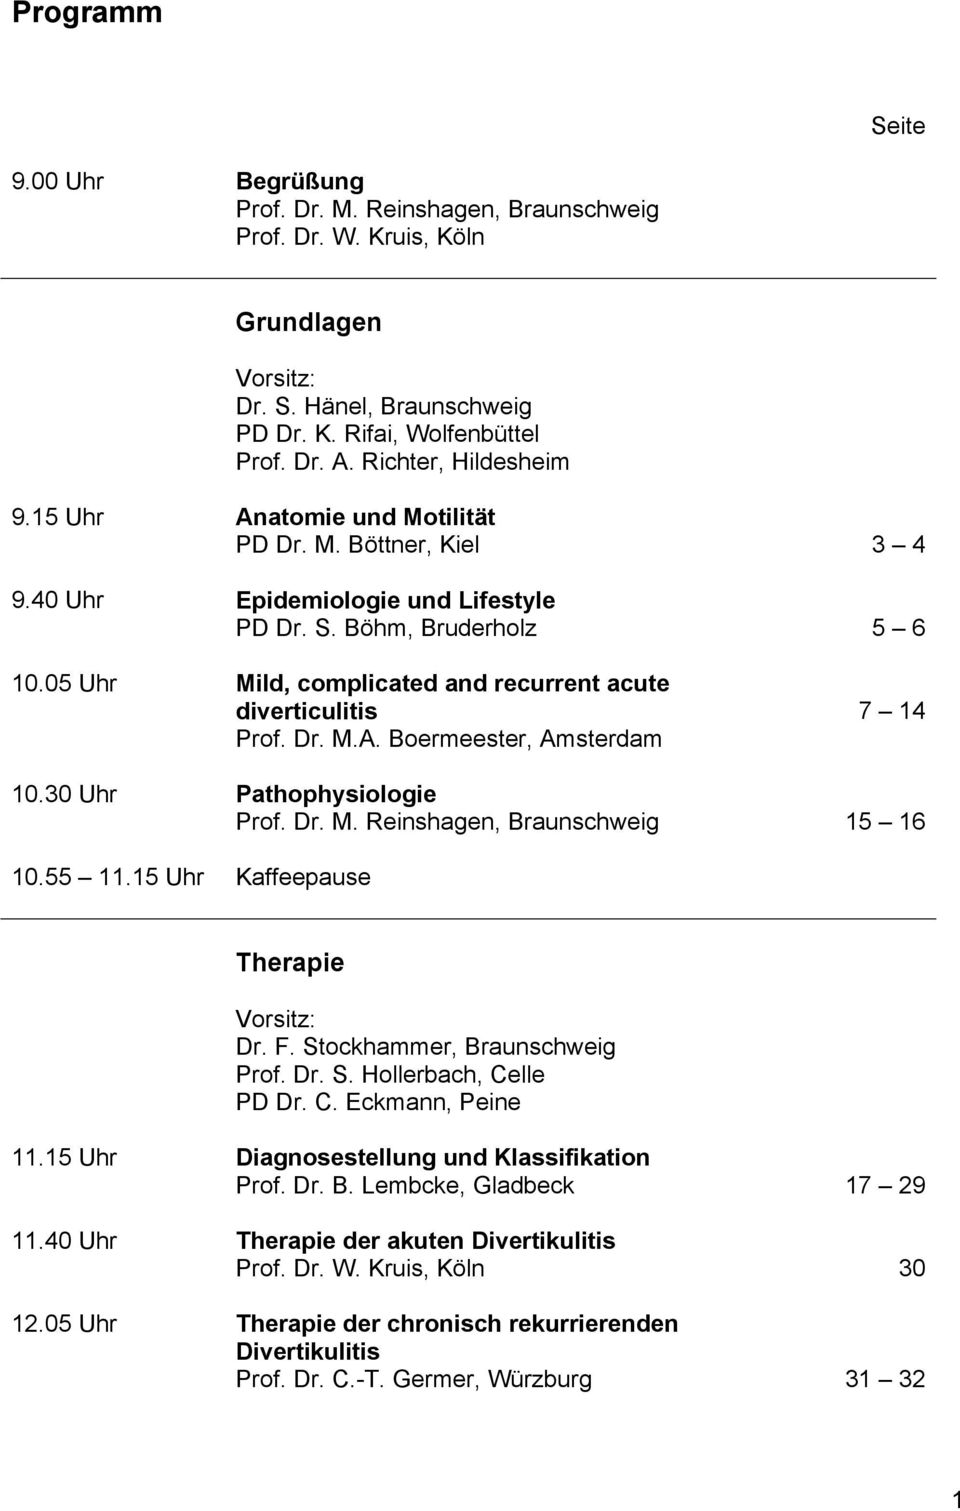 05 Uhr Mild, complicated and recurrent acute diverticulitis Prof. Dr. M.A. Boermeester, Amsterdam 7 14 10.30 Uhr Pathophysiologie Prof. Dr. M. Reinshagen, Braunschweig 15 16 10.55 11.